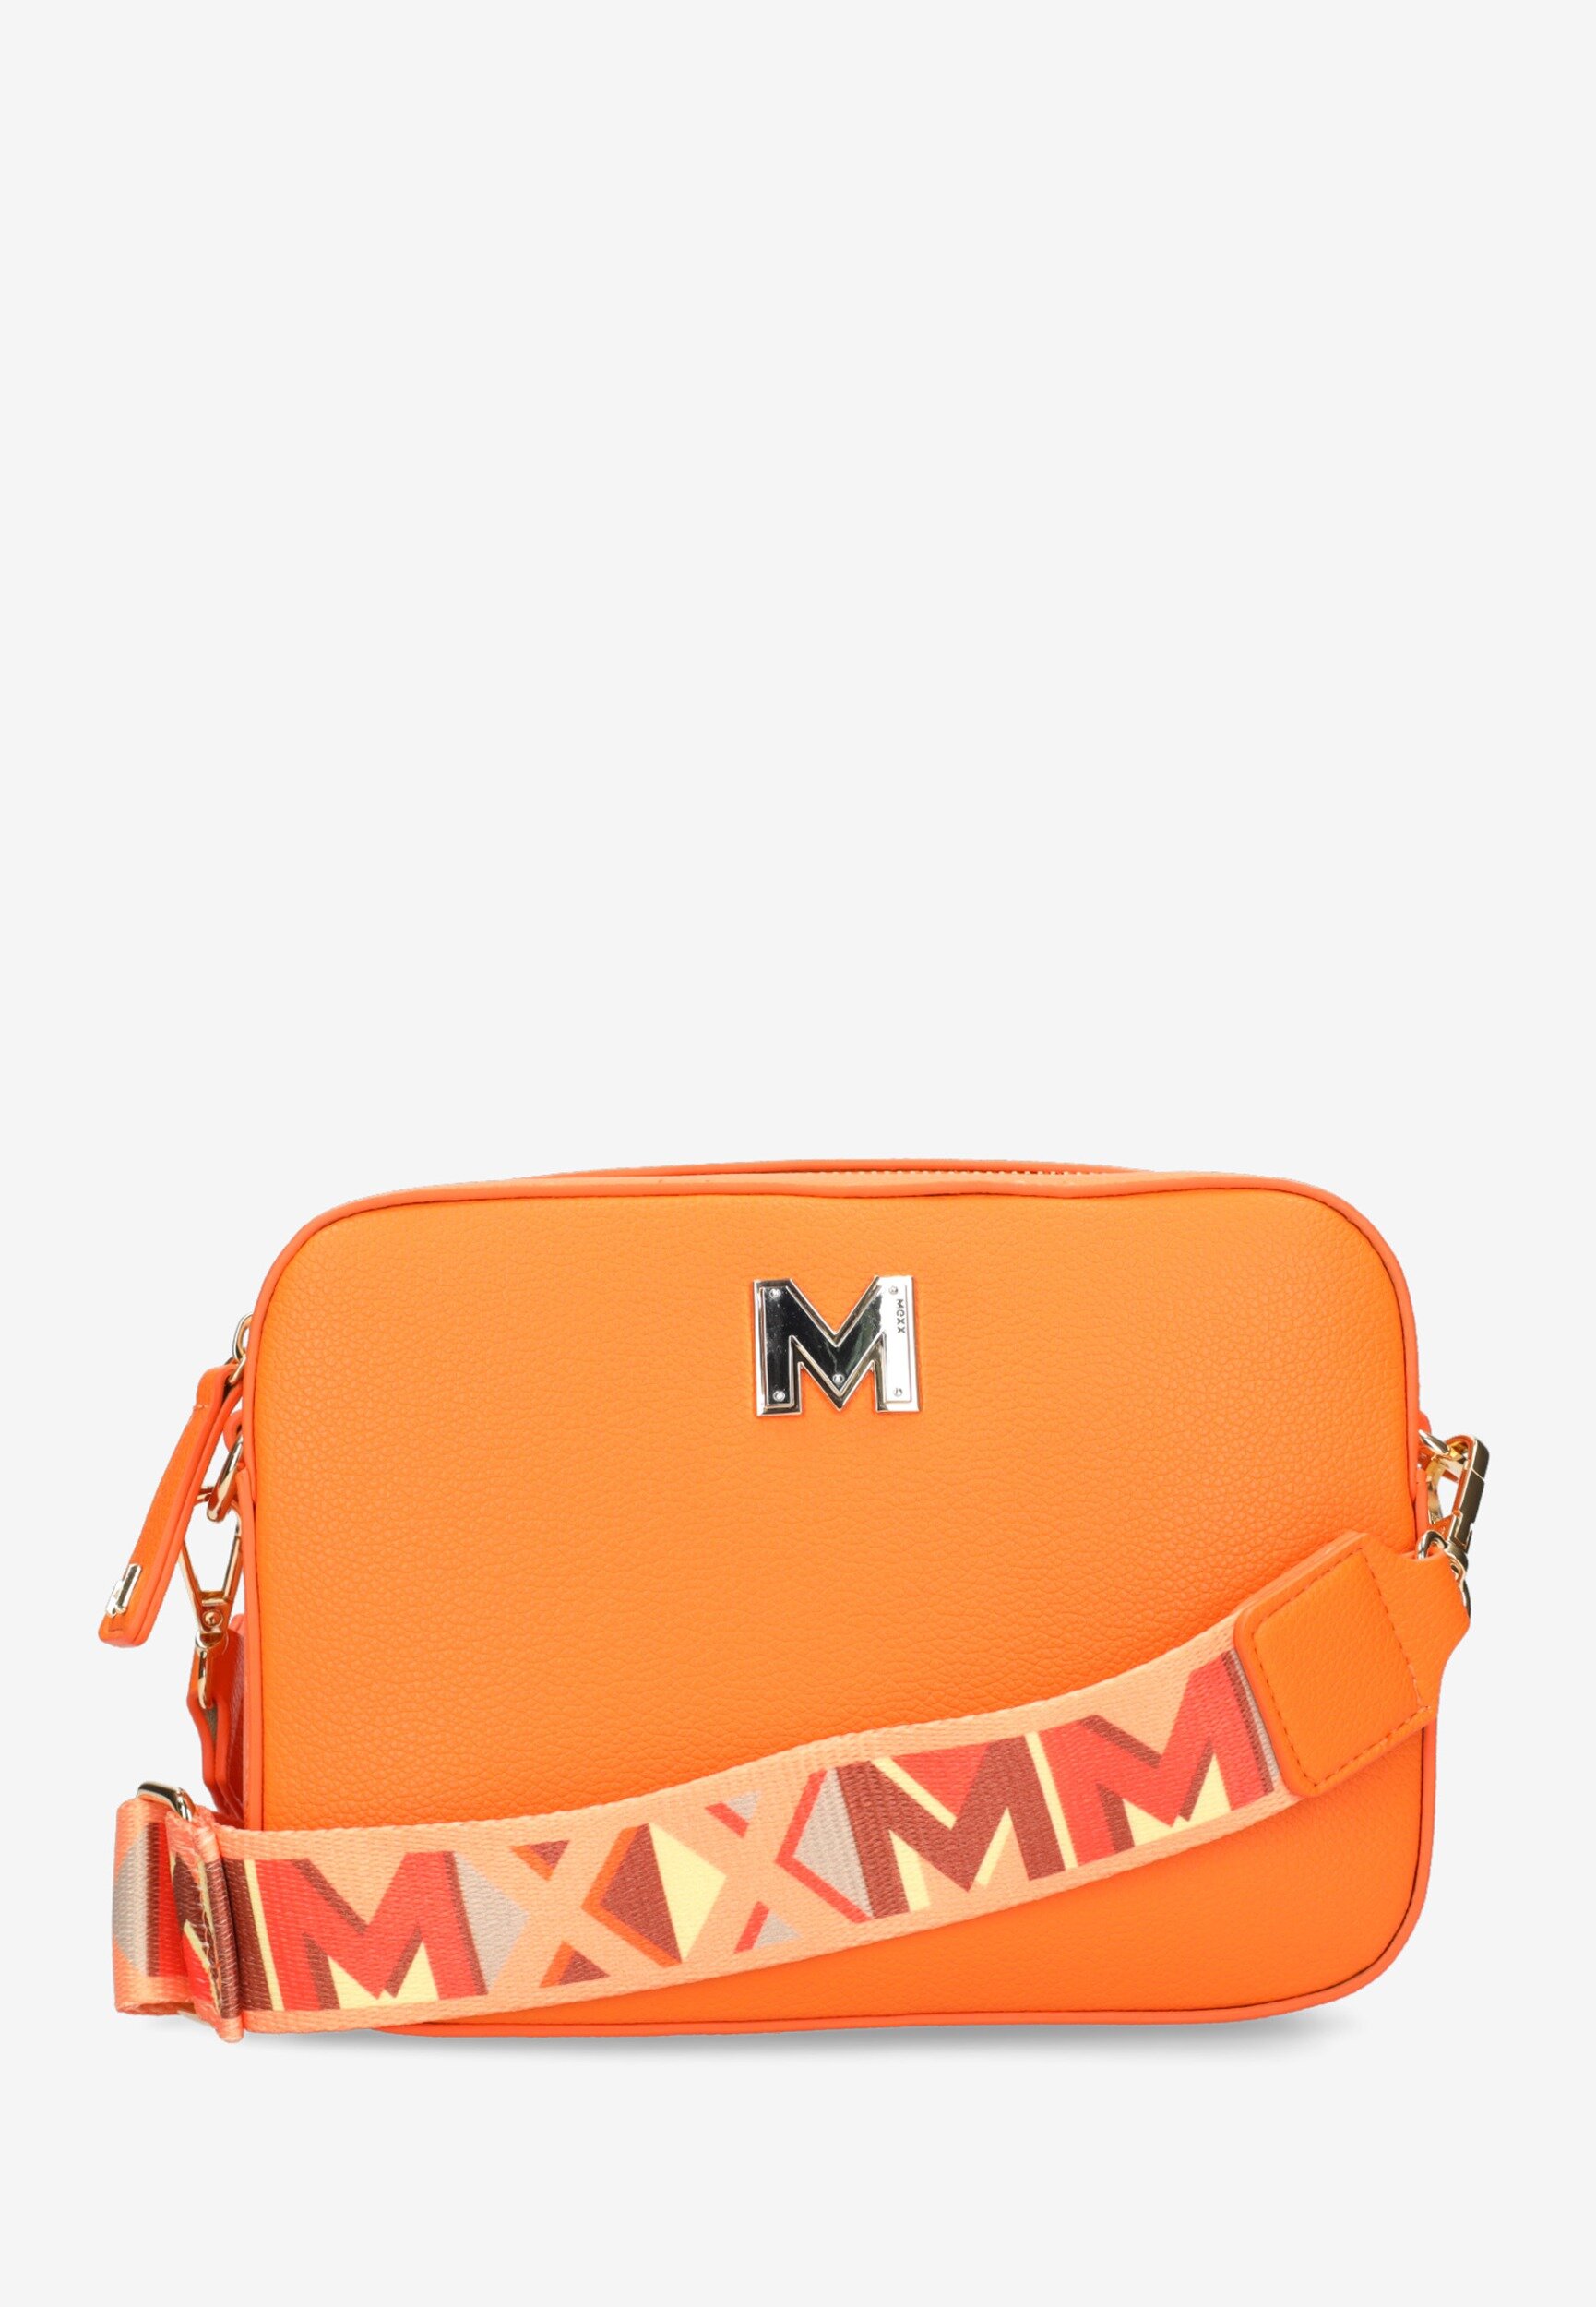 Ham Convergeren voorwoord MX concept bag Orange | Mexx | Mexx.com